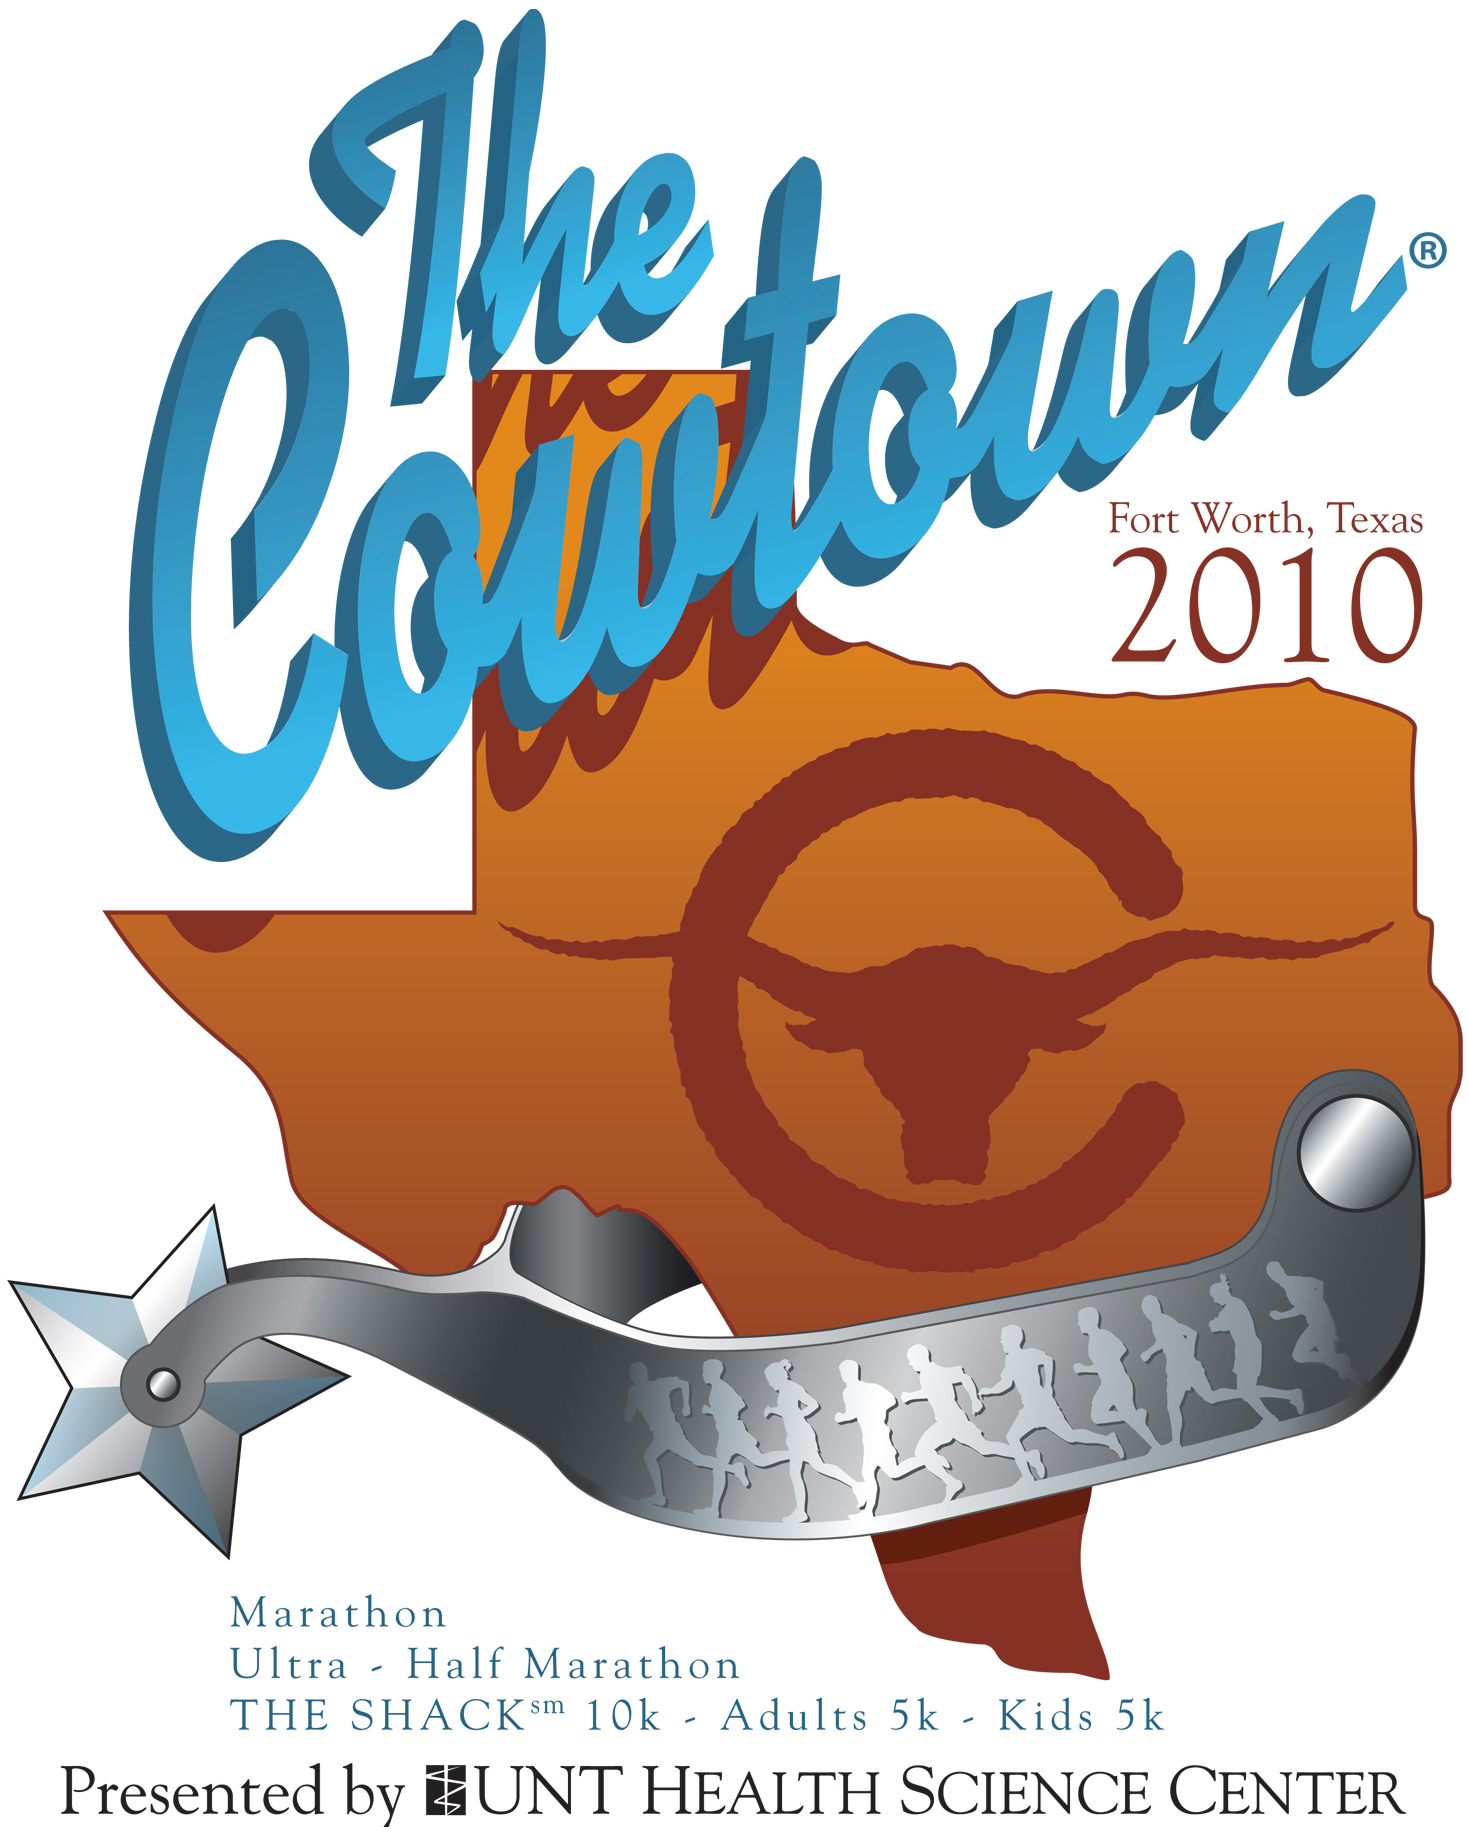 Cowtown The Shack 10K - Most Participants